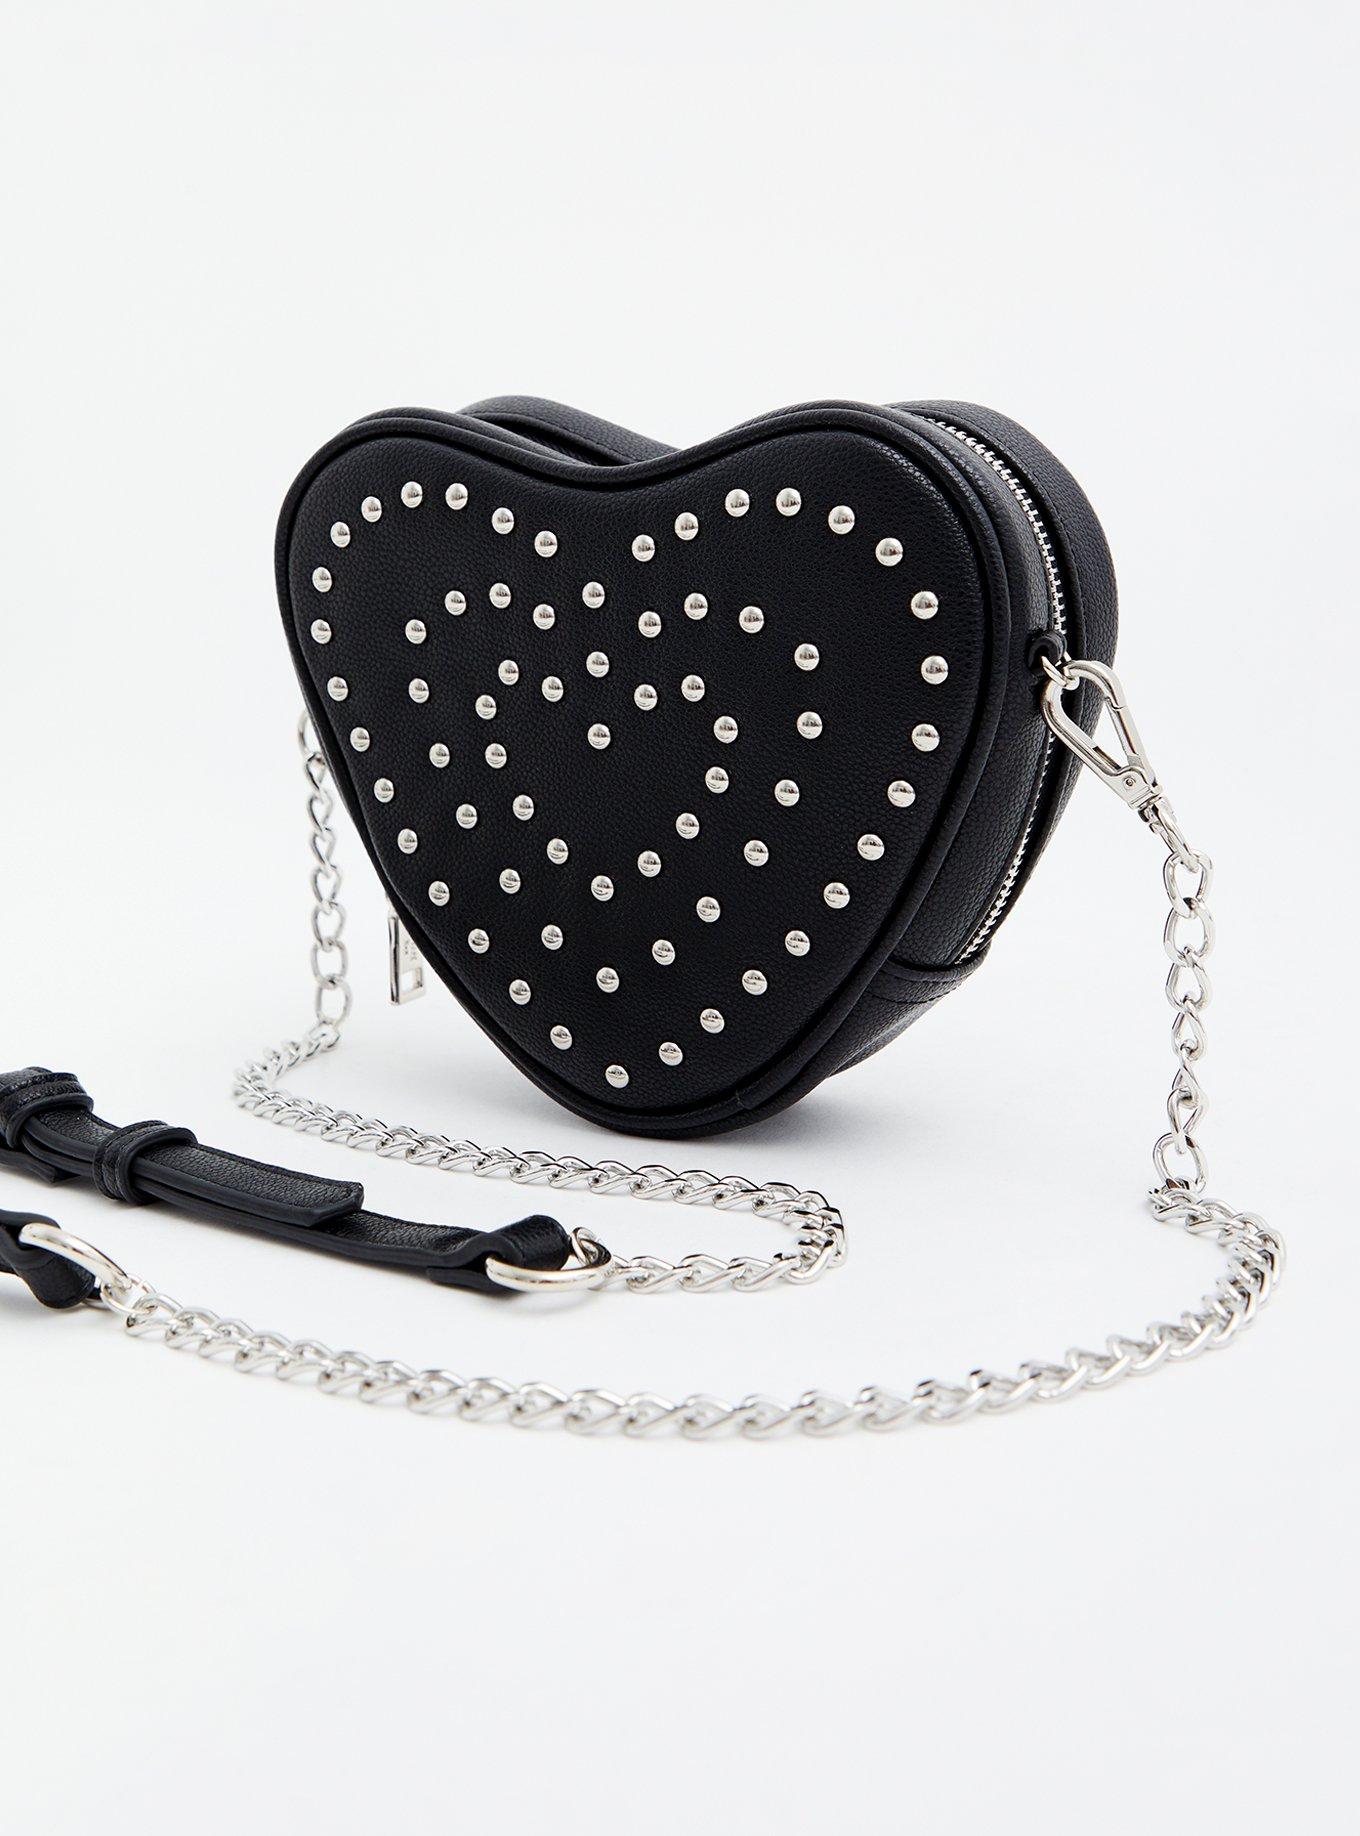 Plus Size - Betsey Johnson Black Faux Leather Studded Heart Crossbody ...